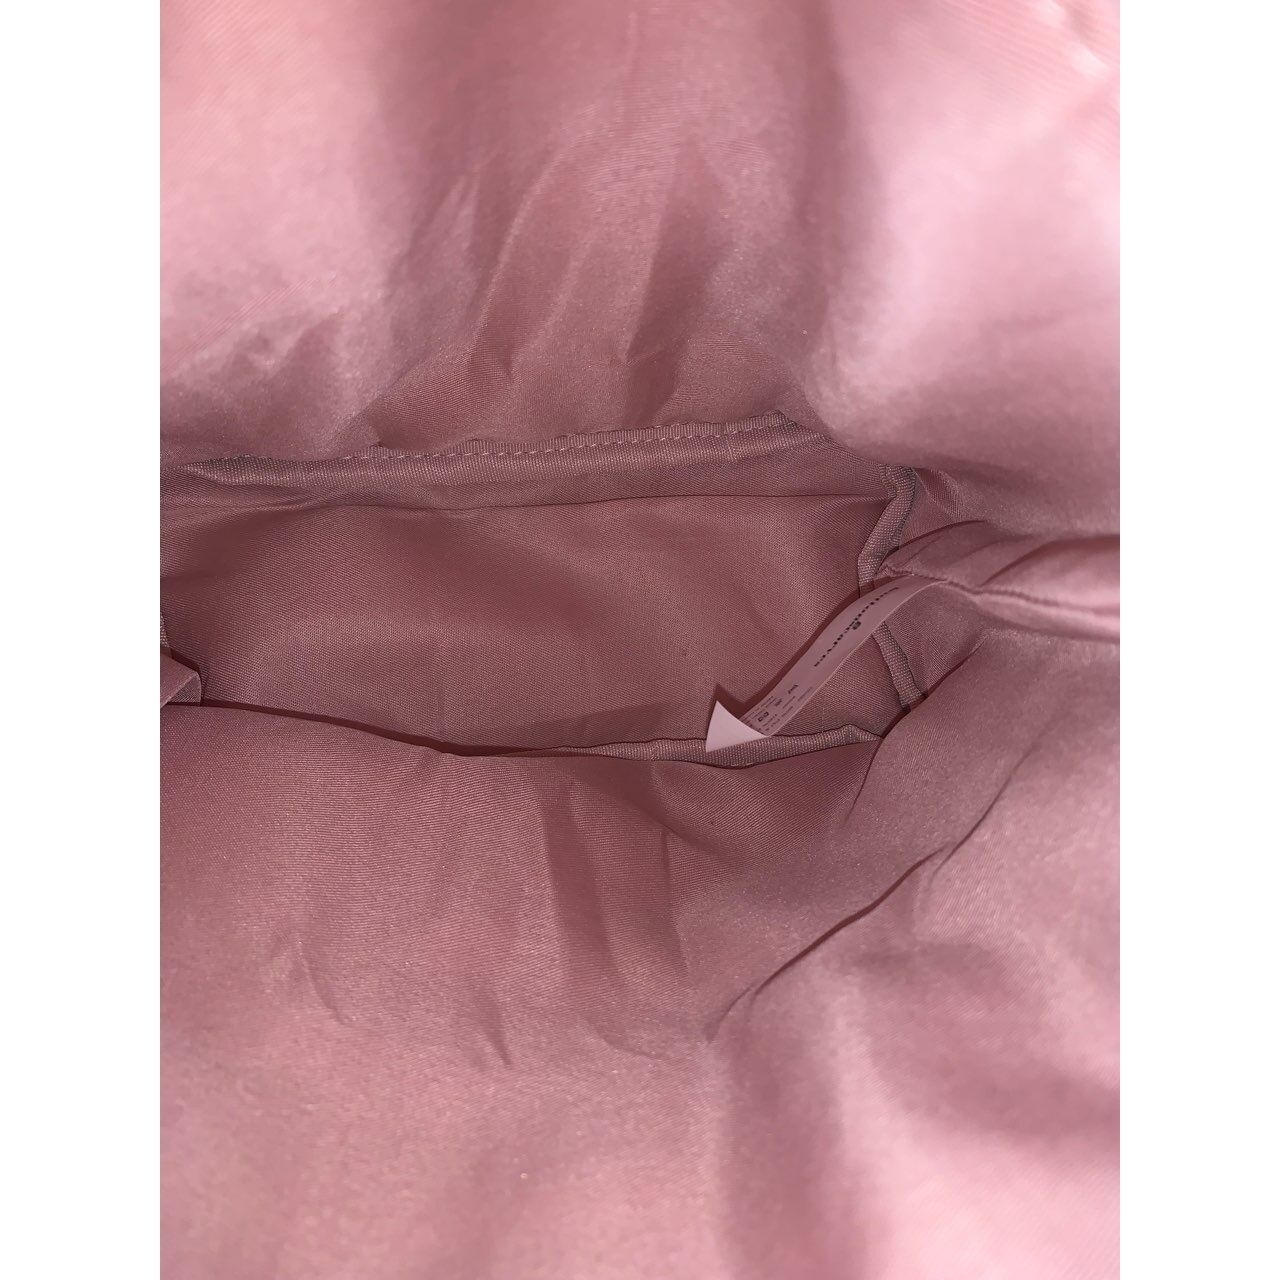 Button Scarves Pink Multifunction Bag